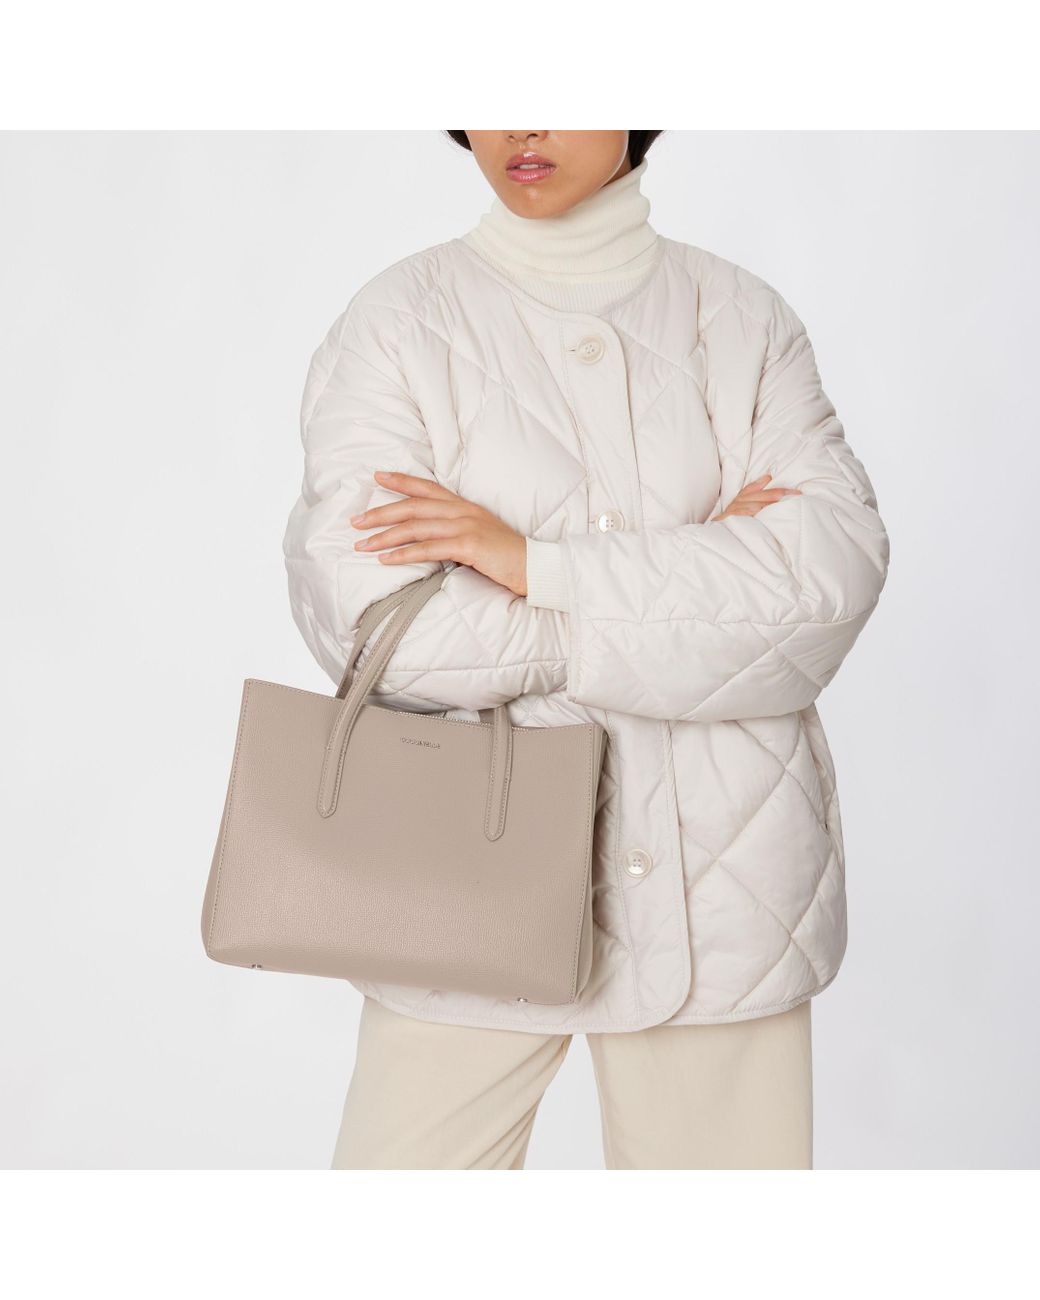 Coccinelle Saffiano Leather Handbag Swap Textured Medium in Natural | Lyst